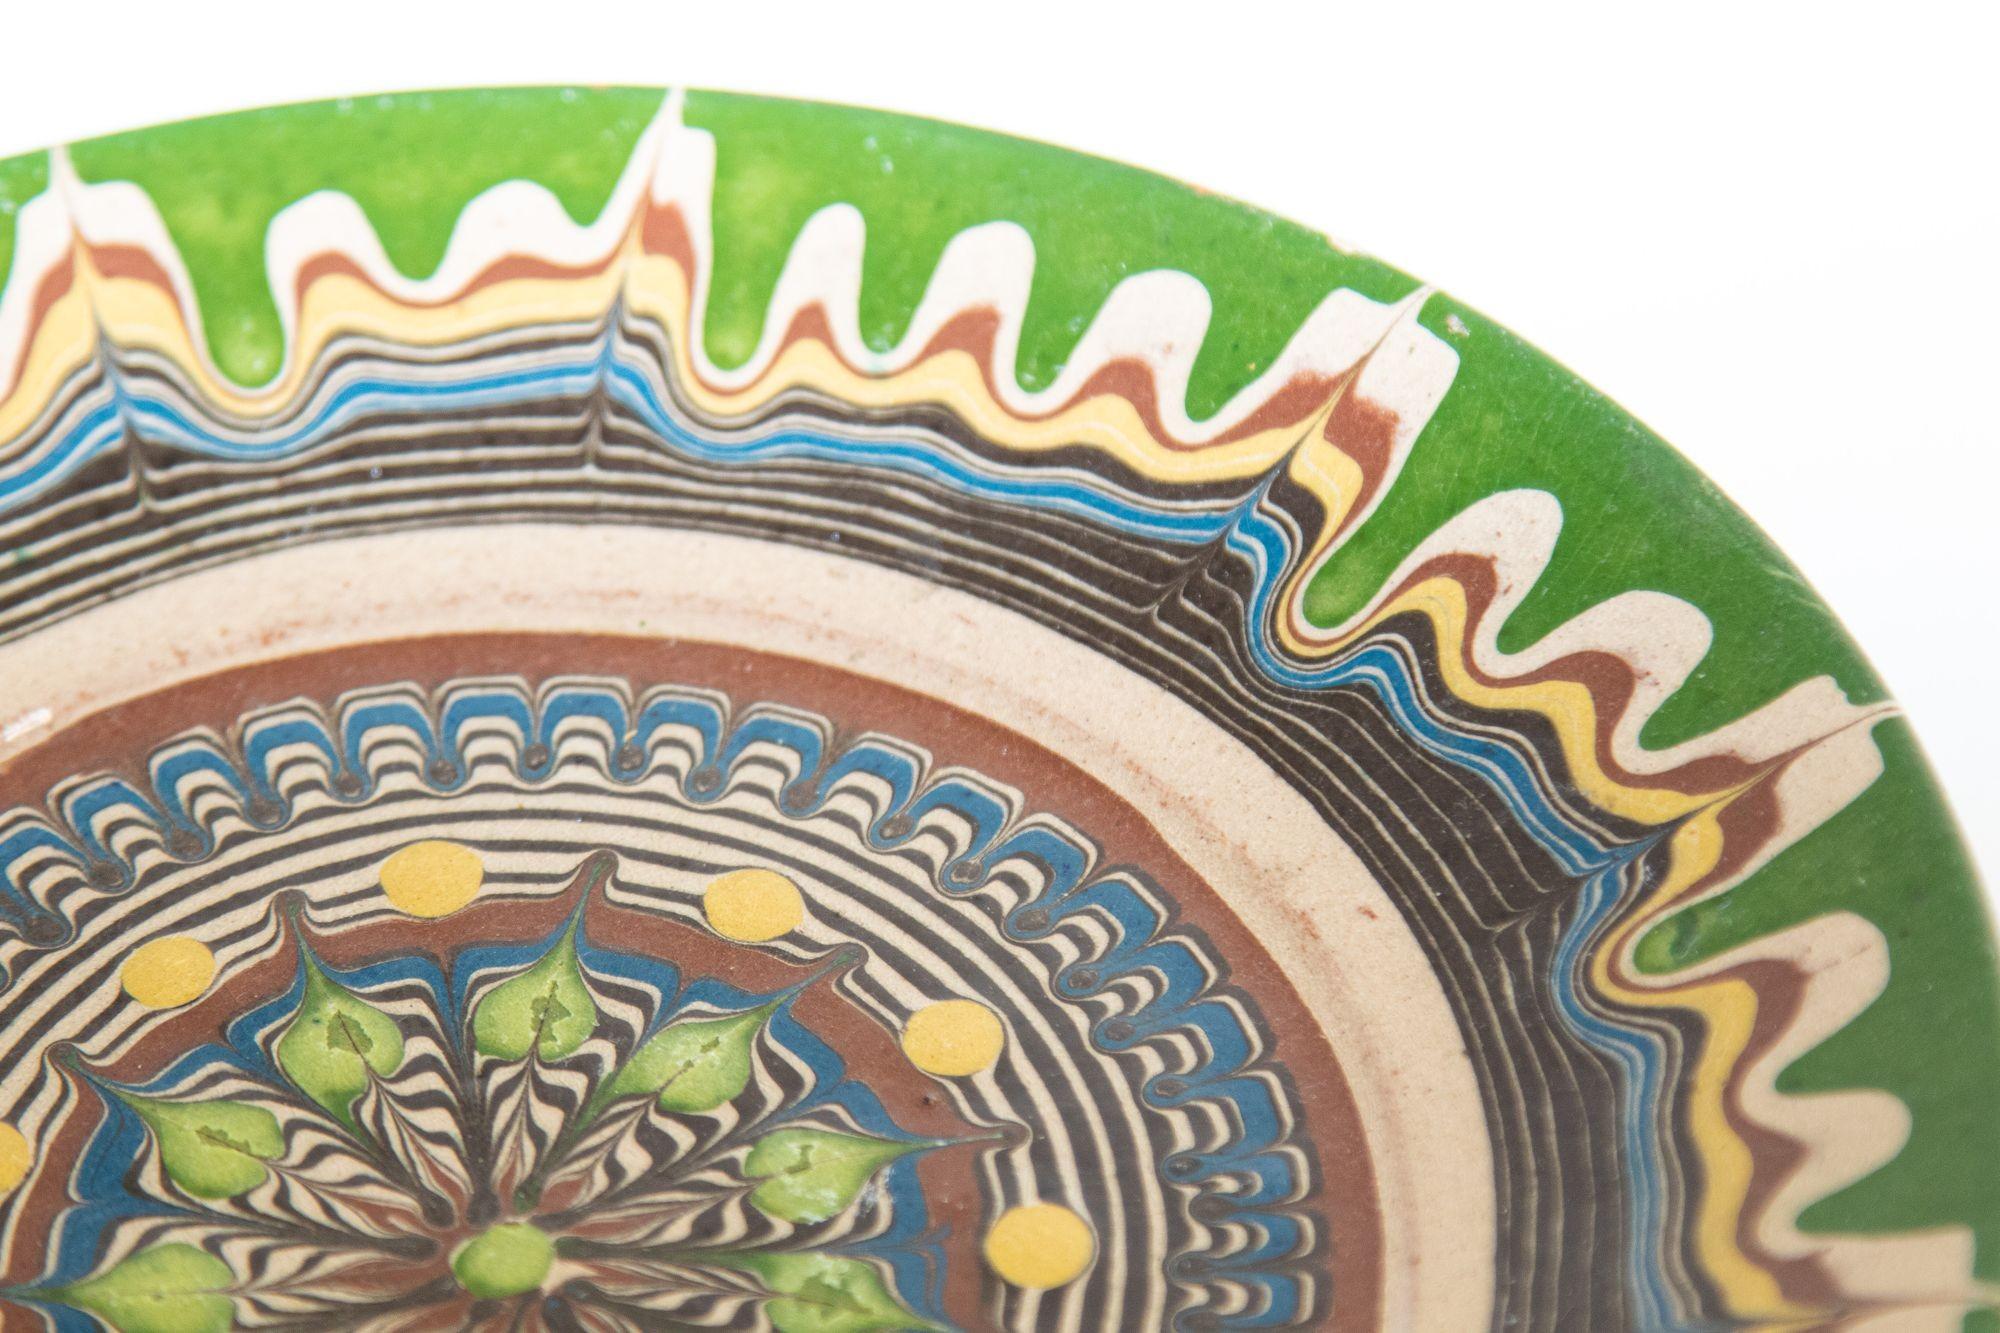 European Hand-Painted Terra Cotta Vintage Danish Pottery Decorative Plate For Sale